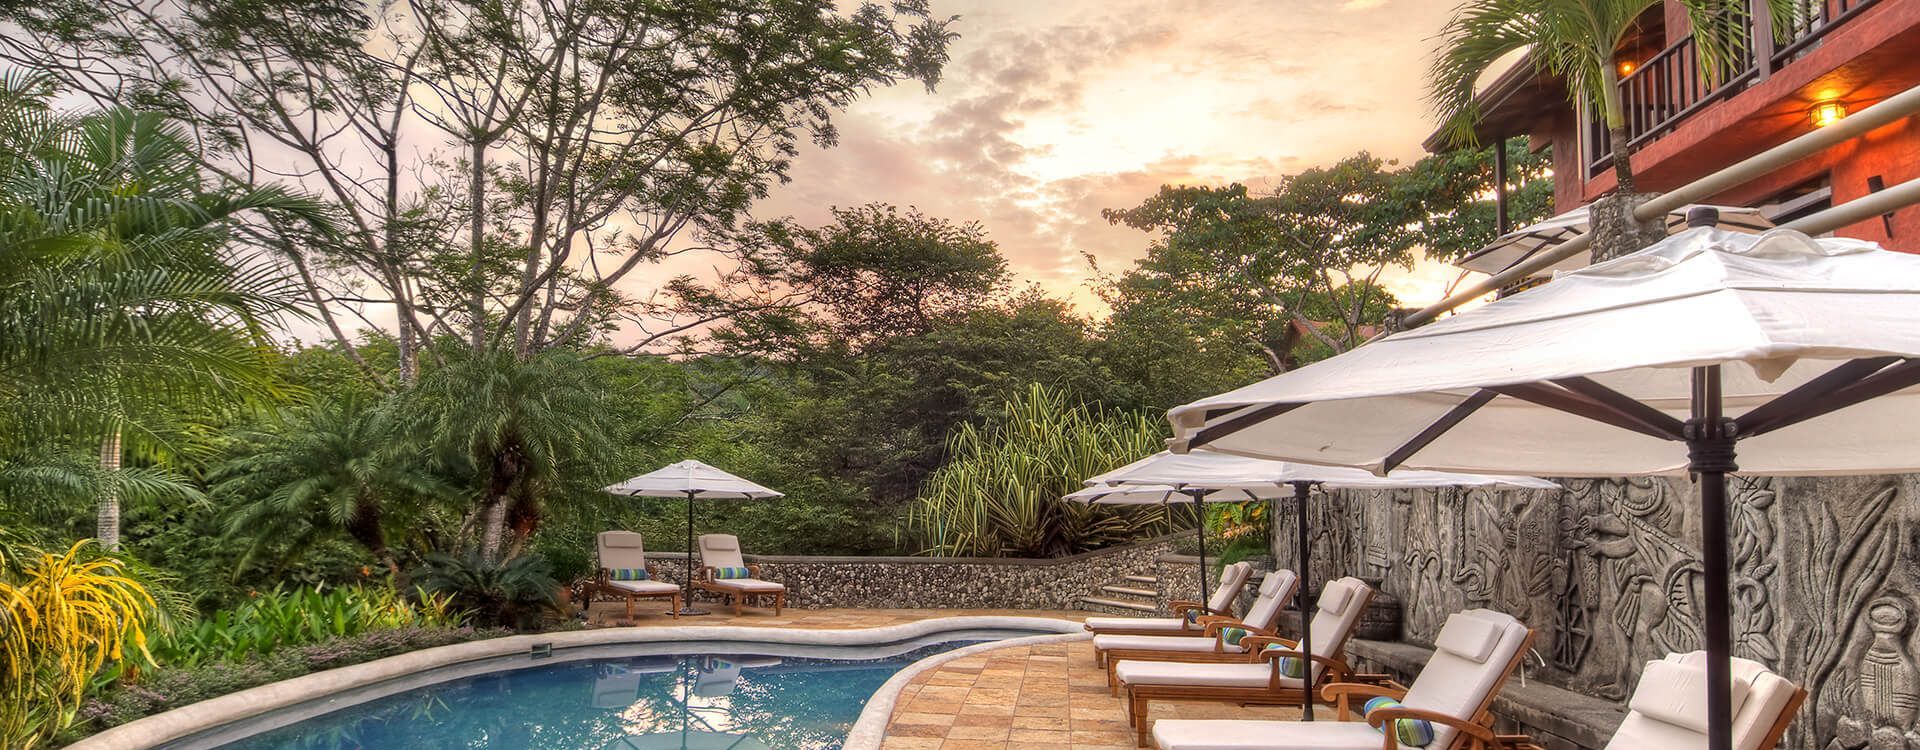 Hacienda Barrigona-pool-side-view.jpg